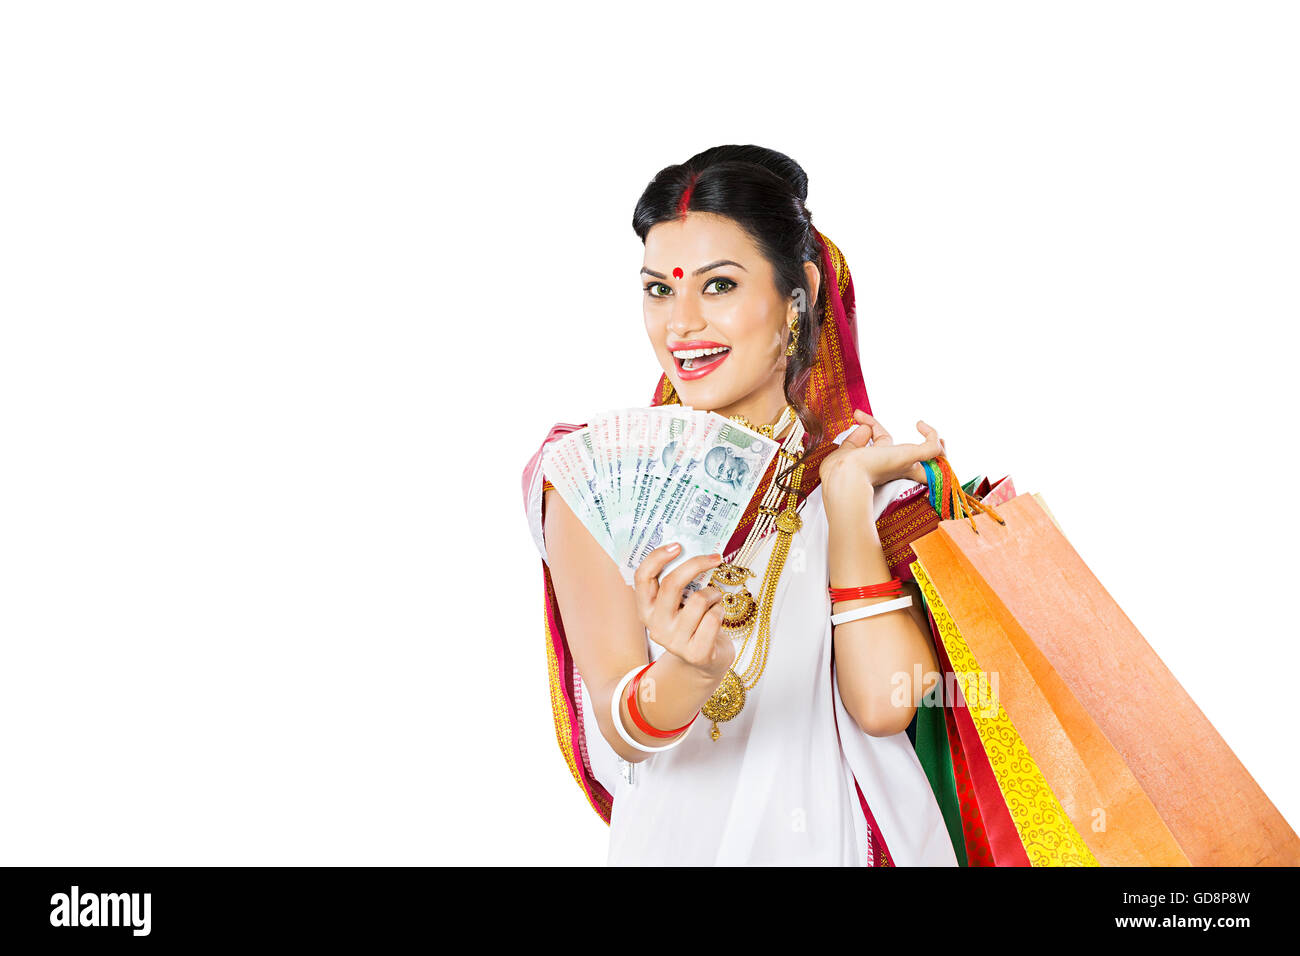 1 Indian Bengali donna adulta Holding Shopping bag il denaro che mostra Foto Stock